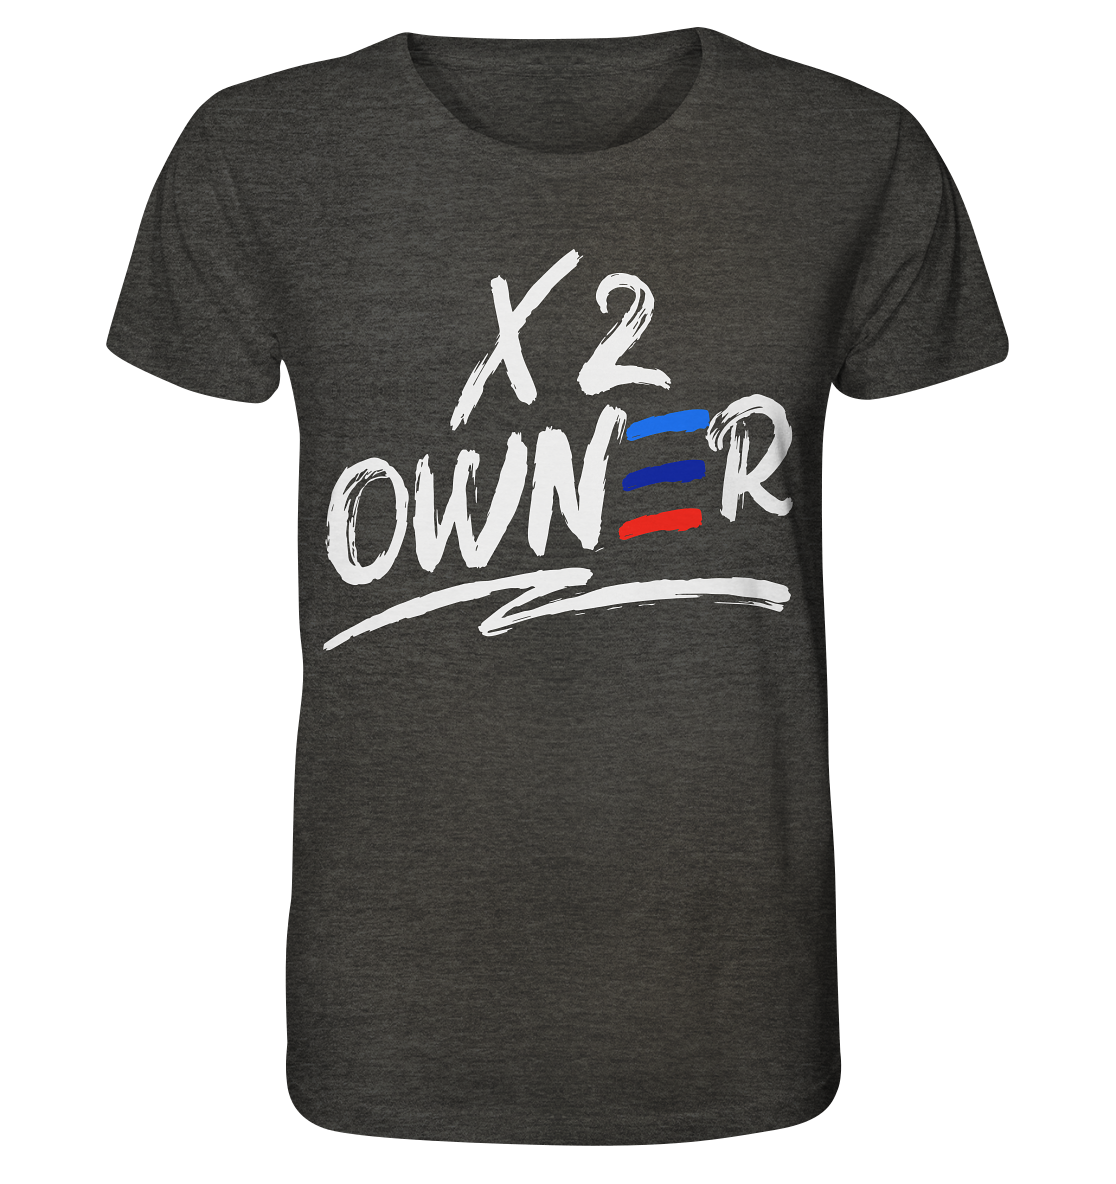 COD_BGKX2OWNER - Organic Shirt (meliert)